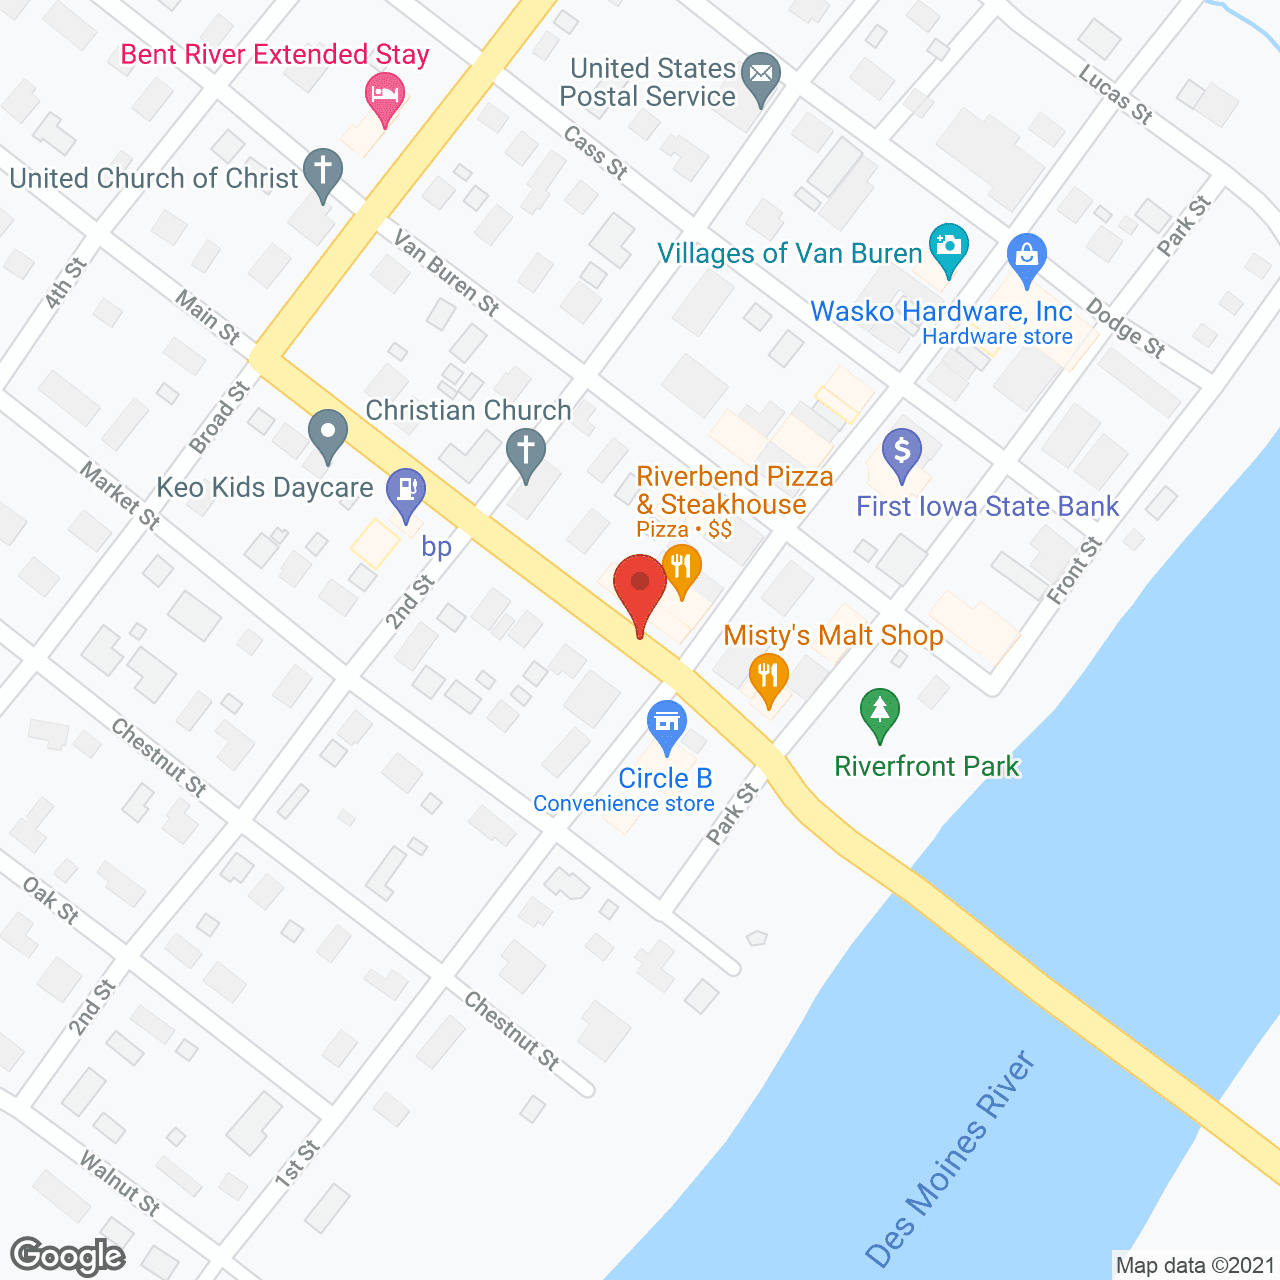 Keosauqua Health Care Center in google map